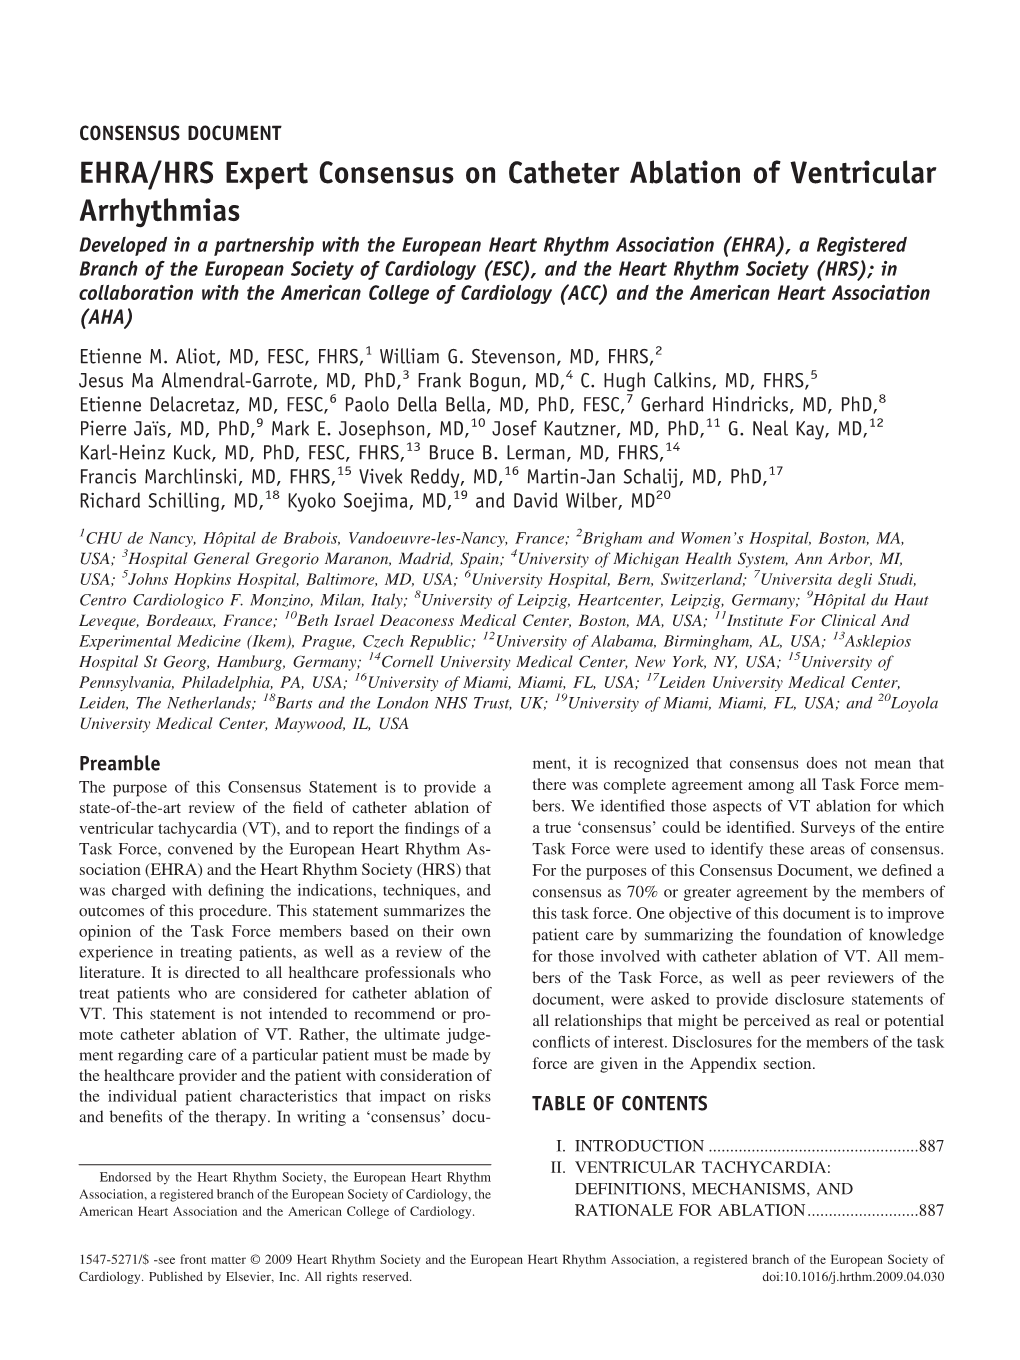 EHRA/HRS Expert Consensus on Catheter Ablation of Ventricular Arrhythmias